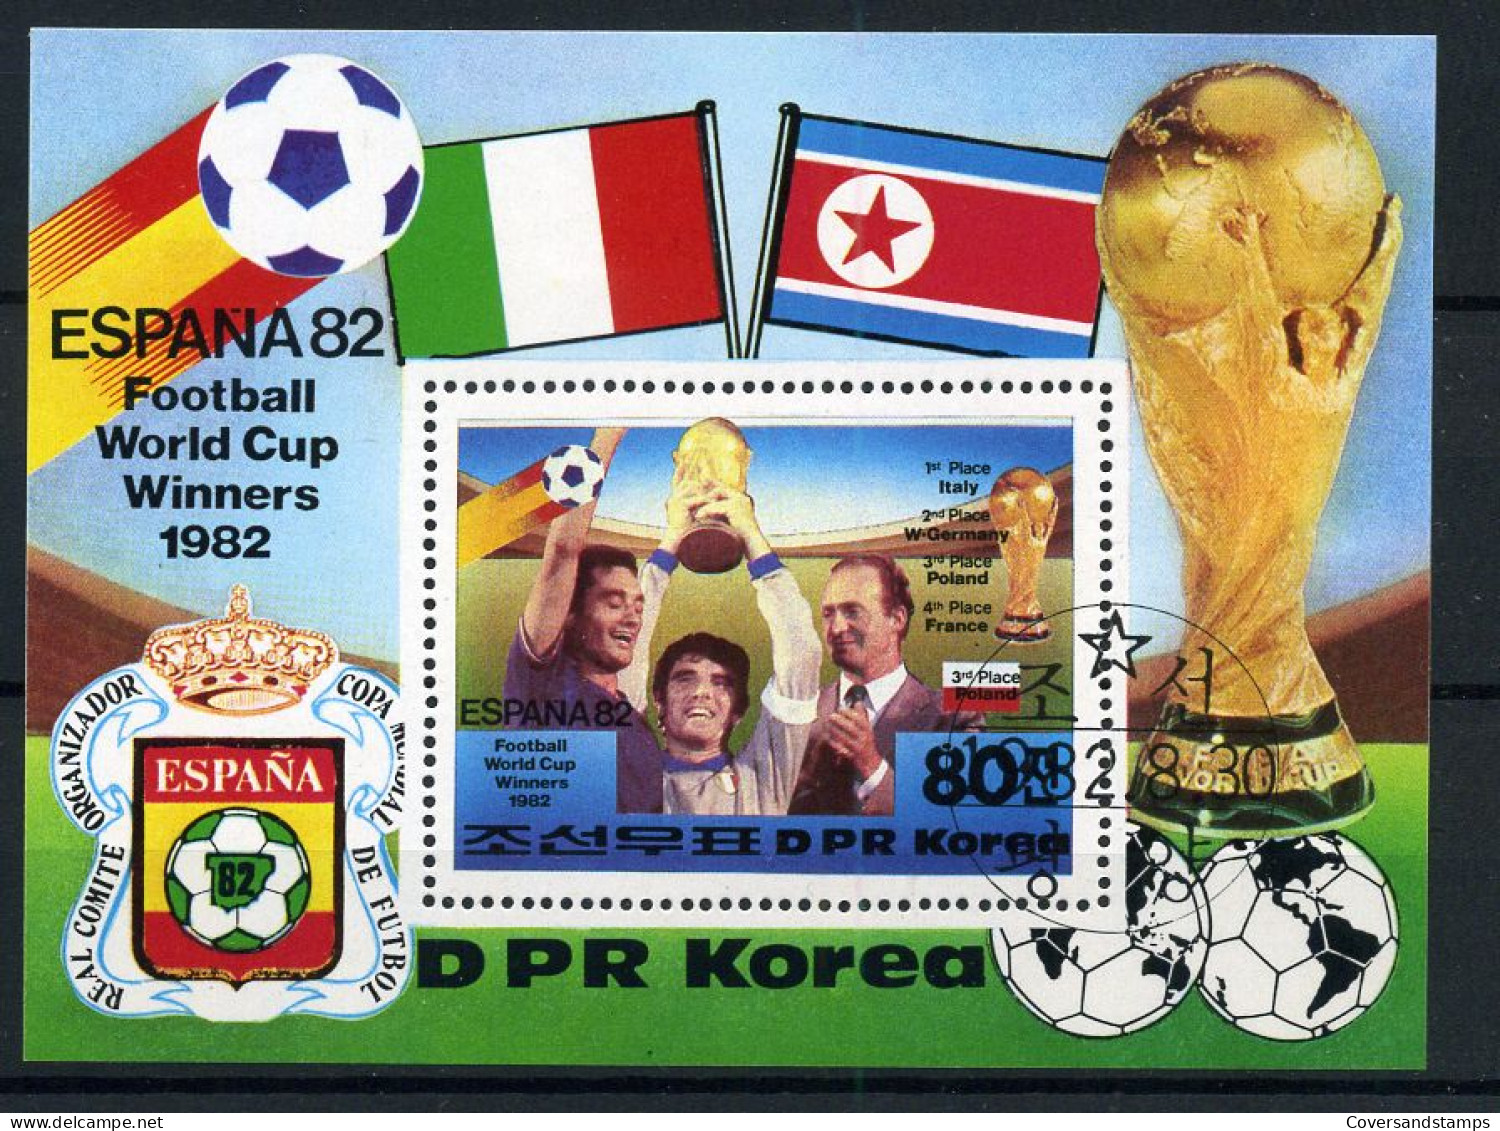 DPR Korea -  Espana 82 Football World Cup Winners 1982 - 1982 – Spain